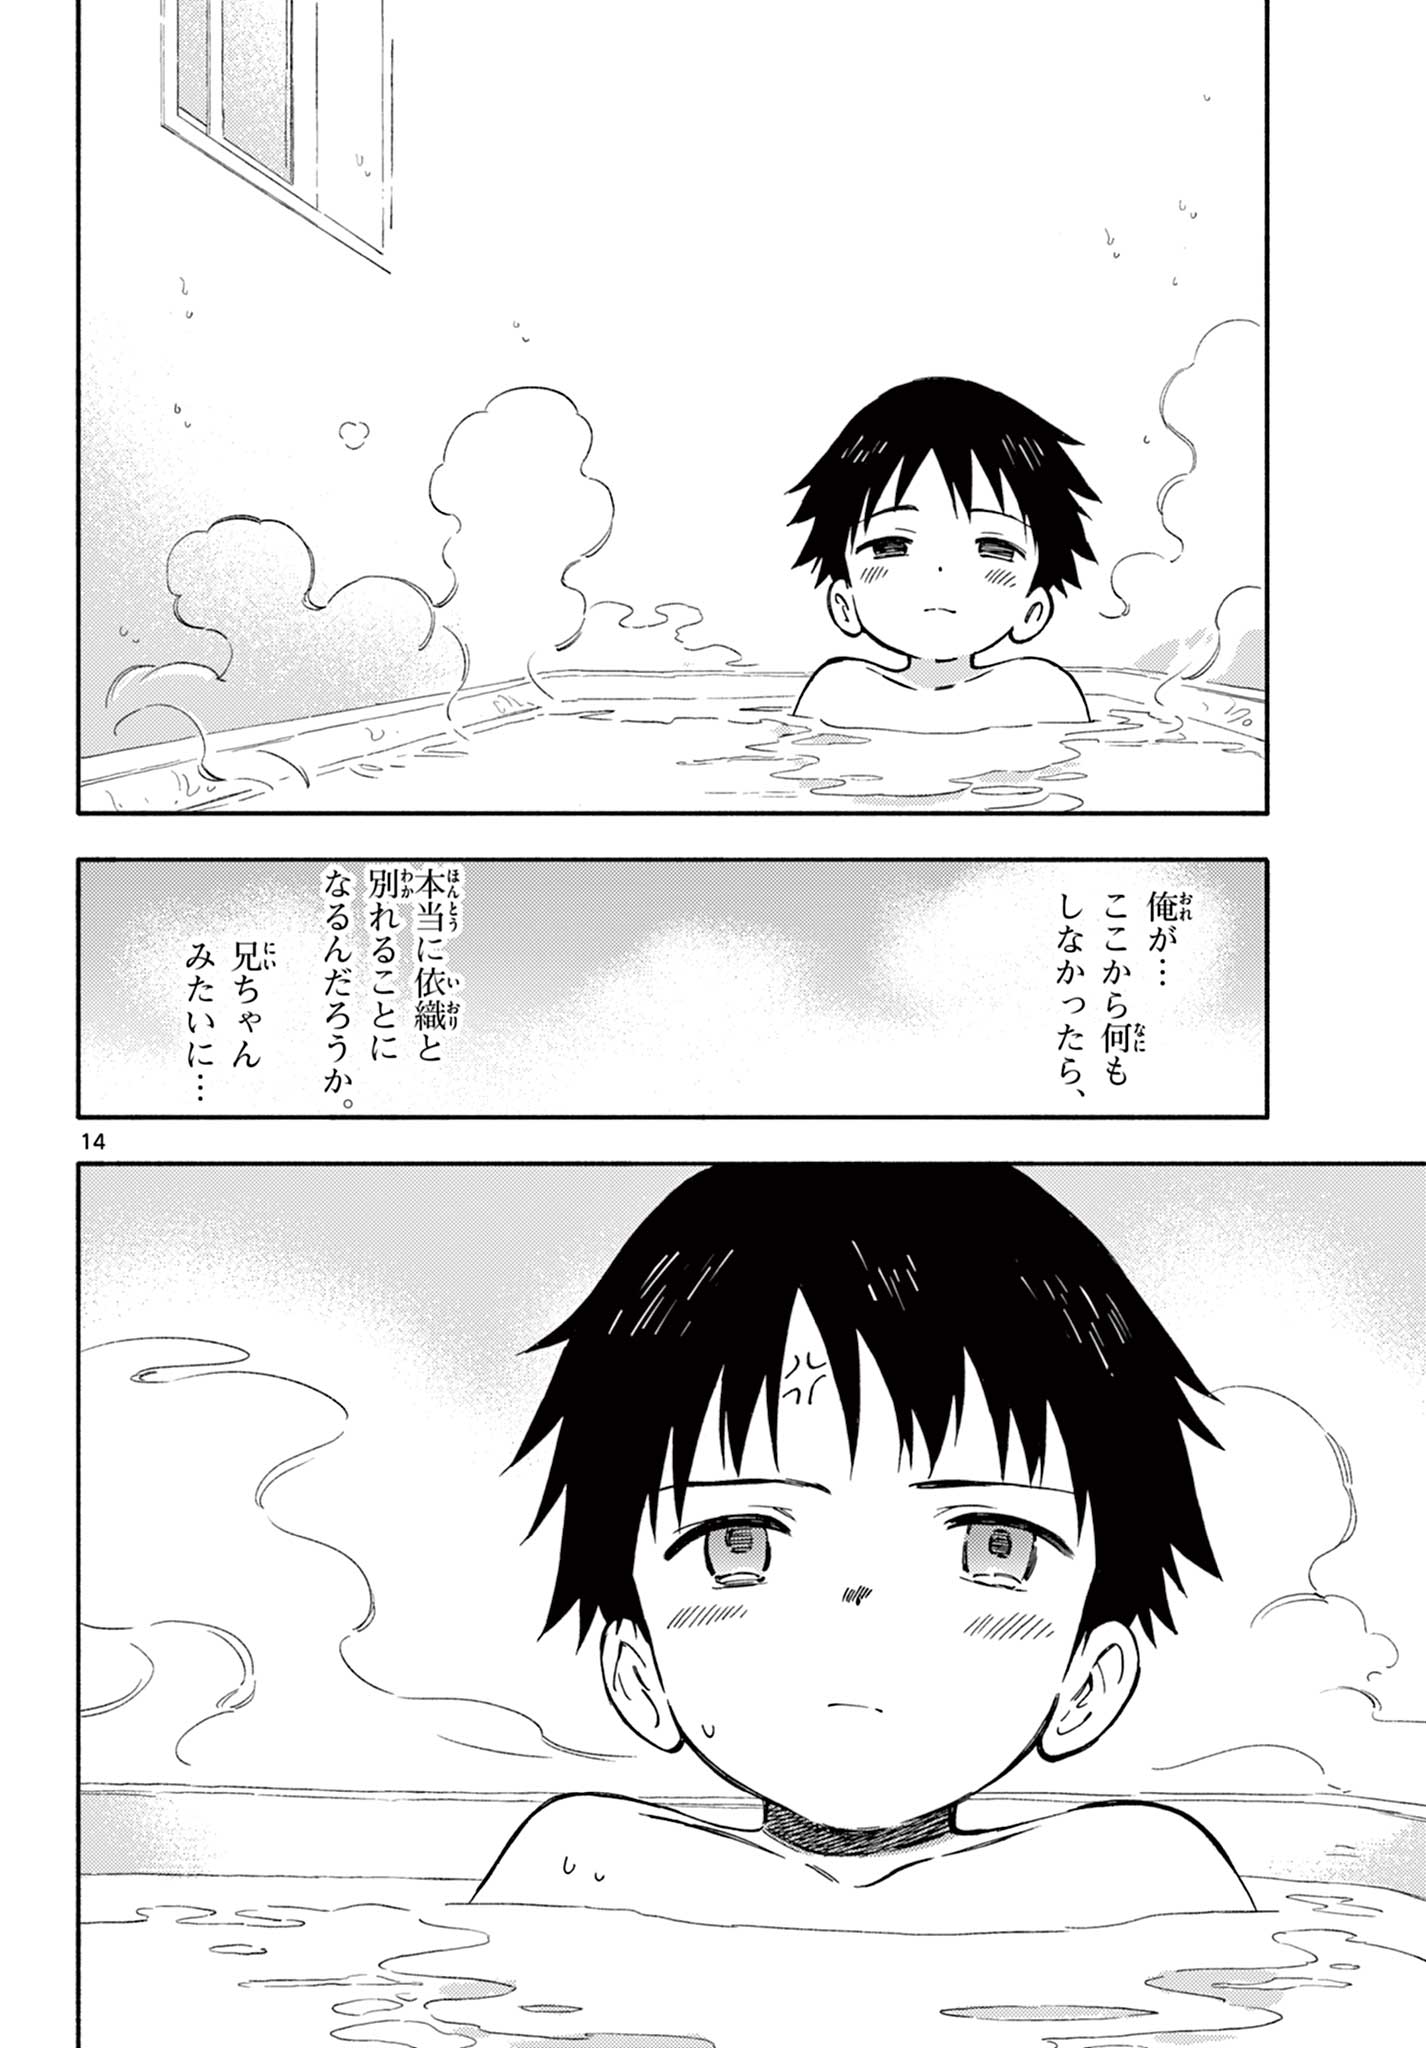 Nami no Shijima no Horizont - Chapter 13.1-2 - Page 2